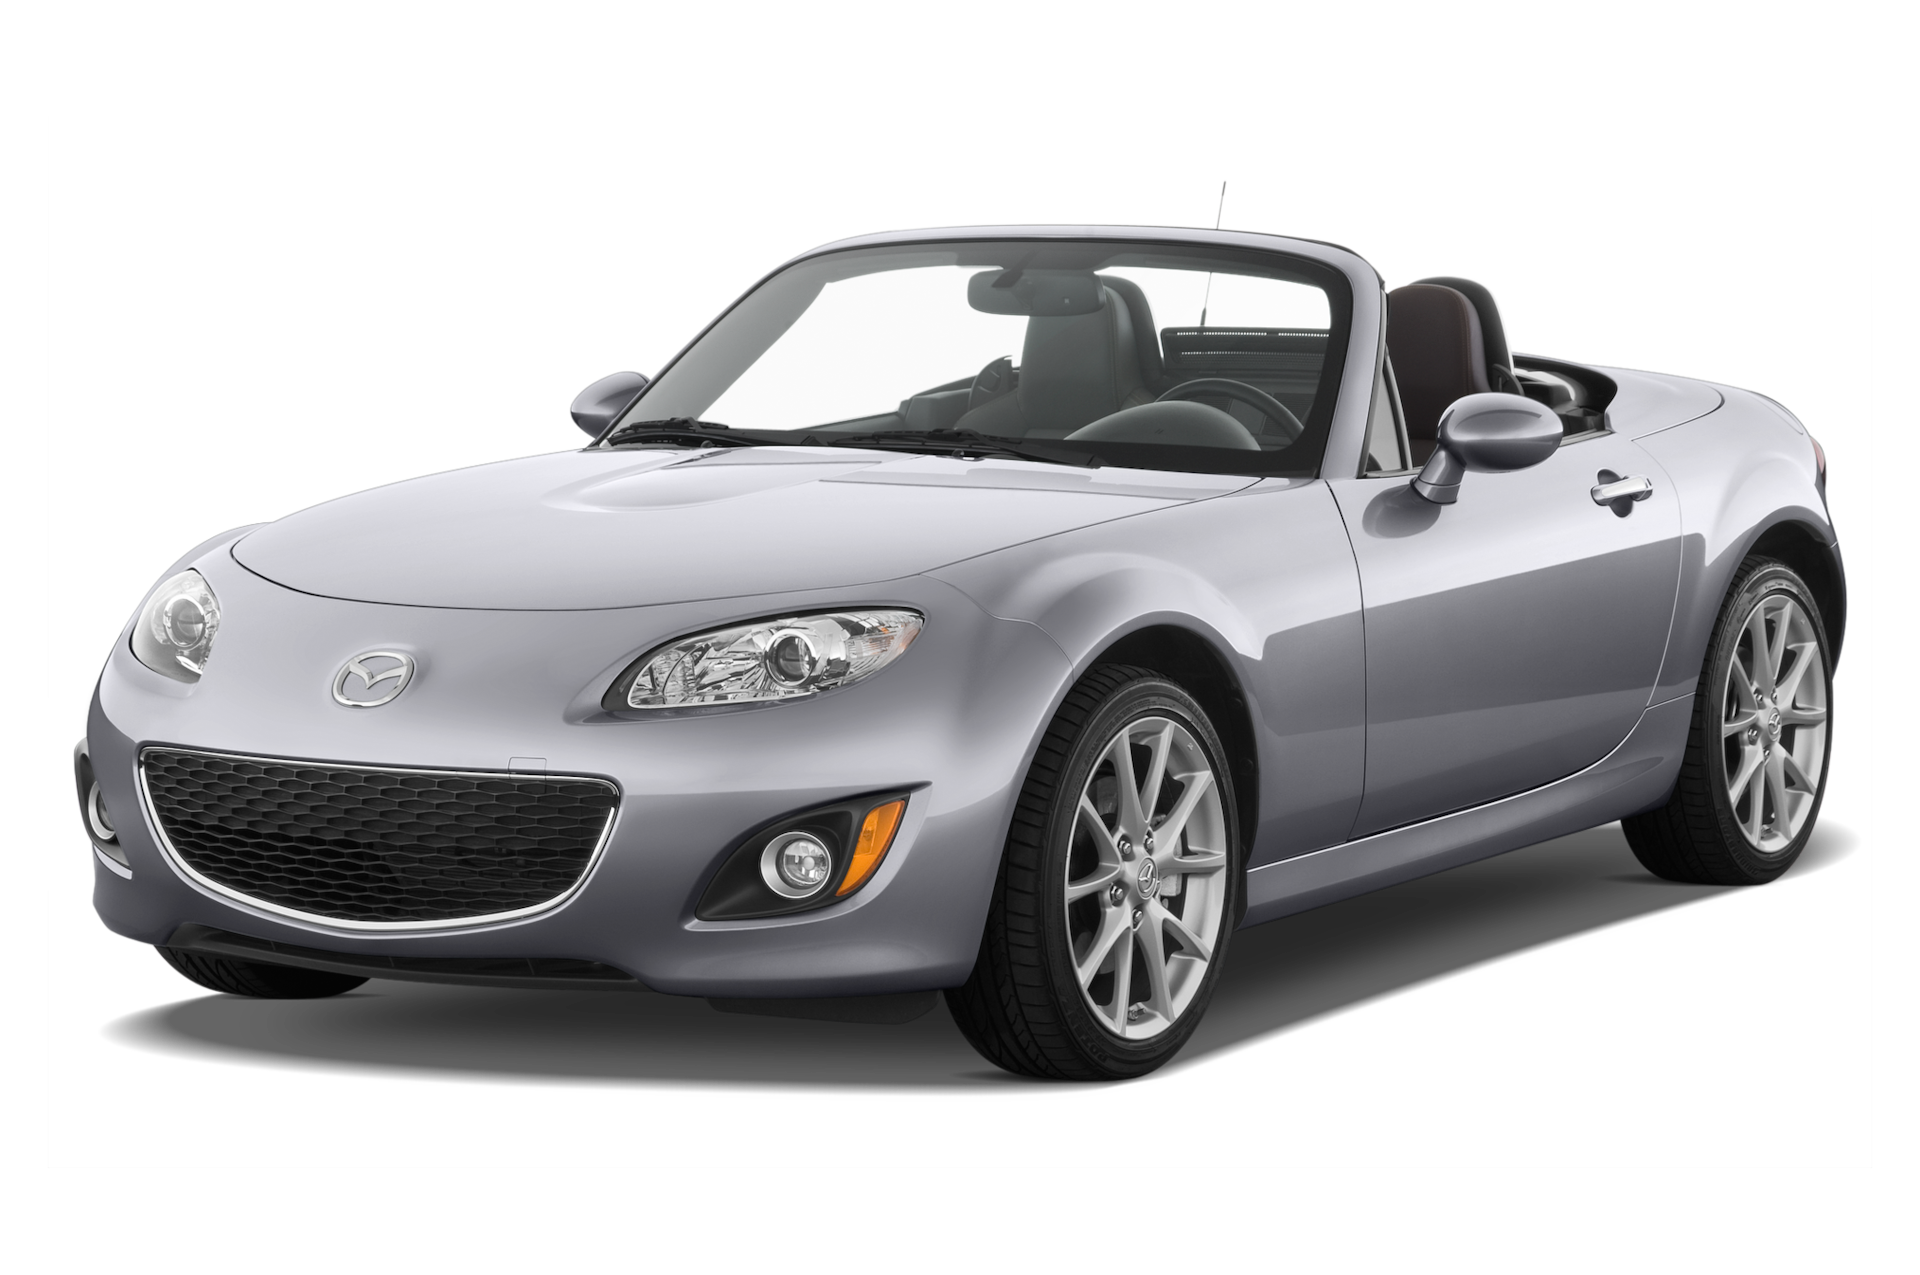 2012 Mazda Miata Prices, Reviews, and Photos - MotorTrend